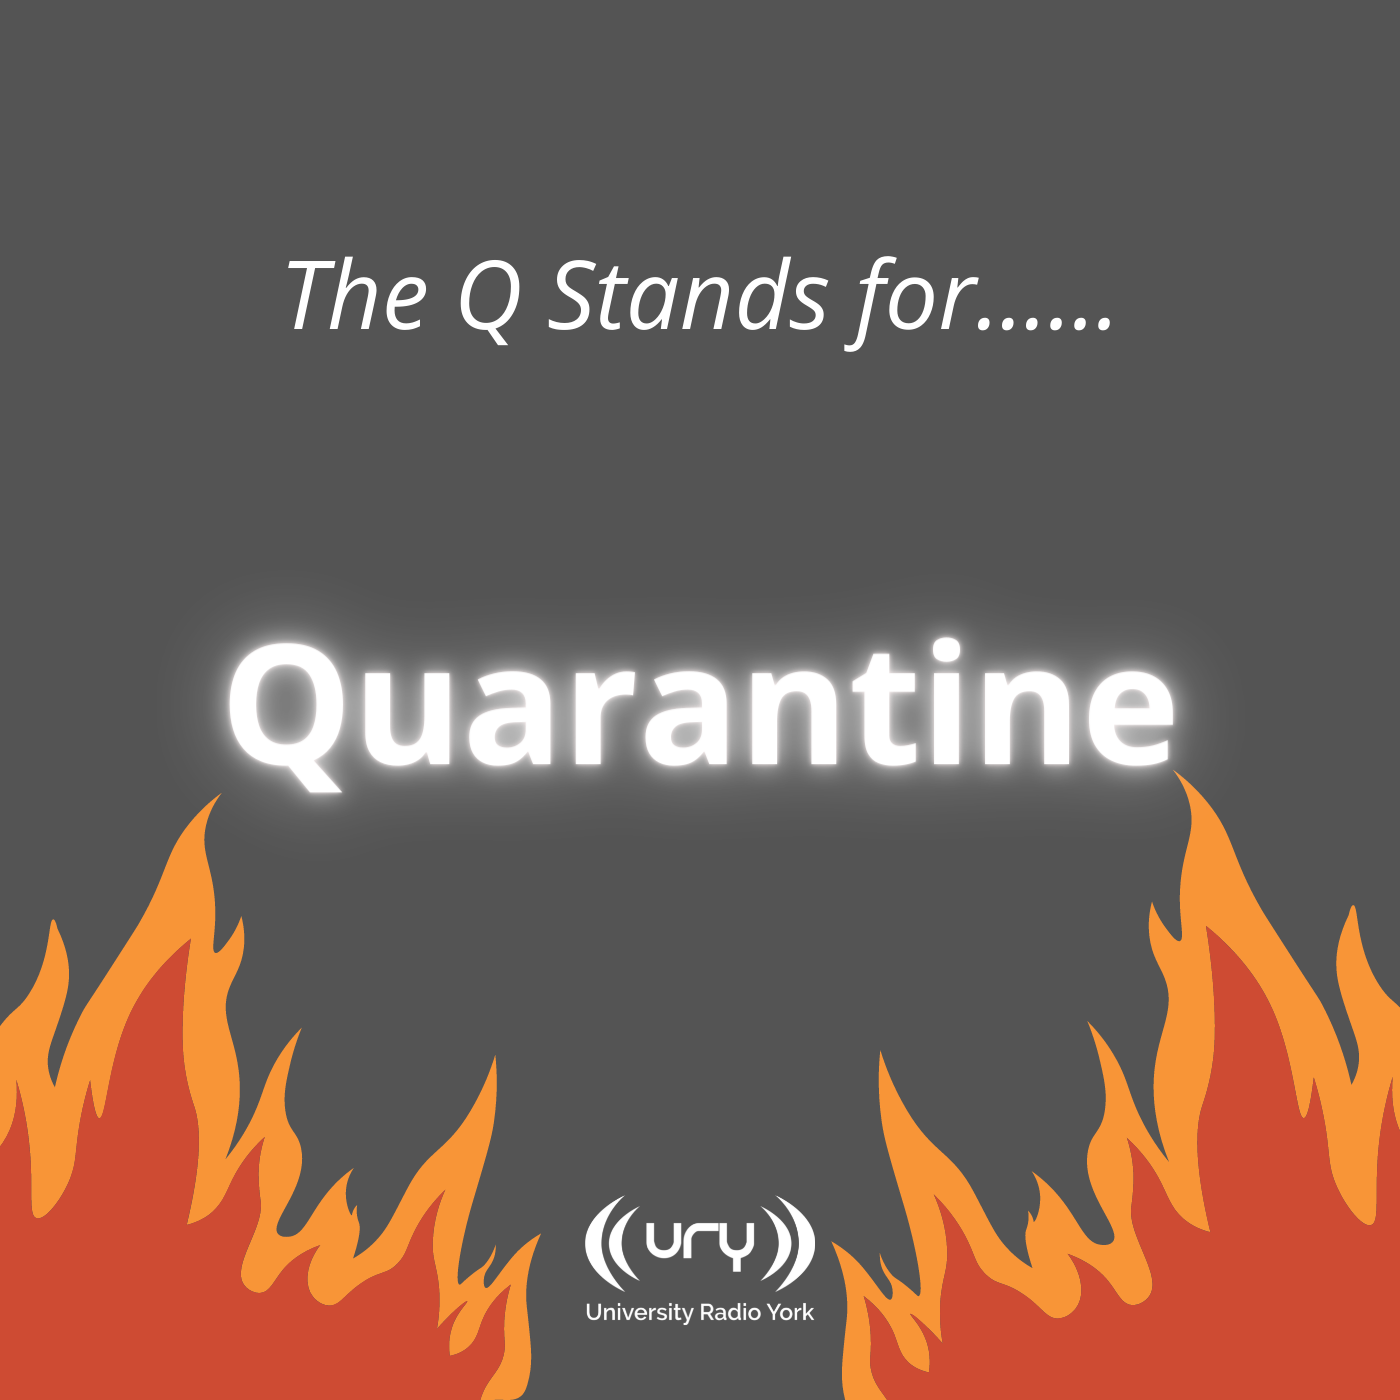 The Q stands for Quarantine Logo